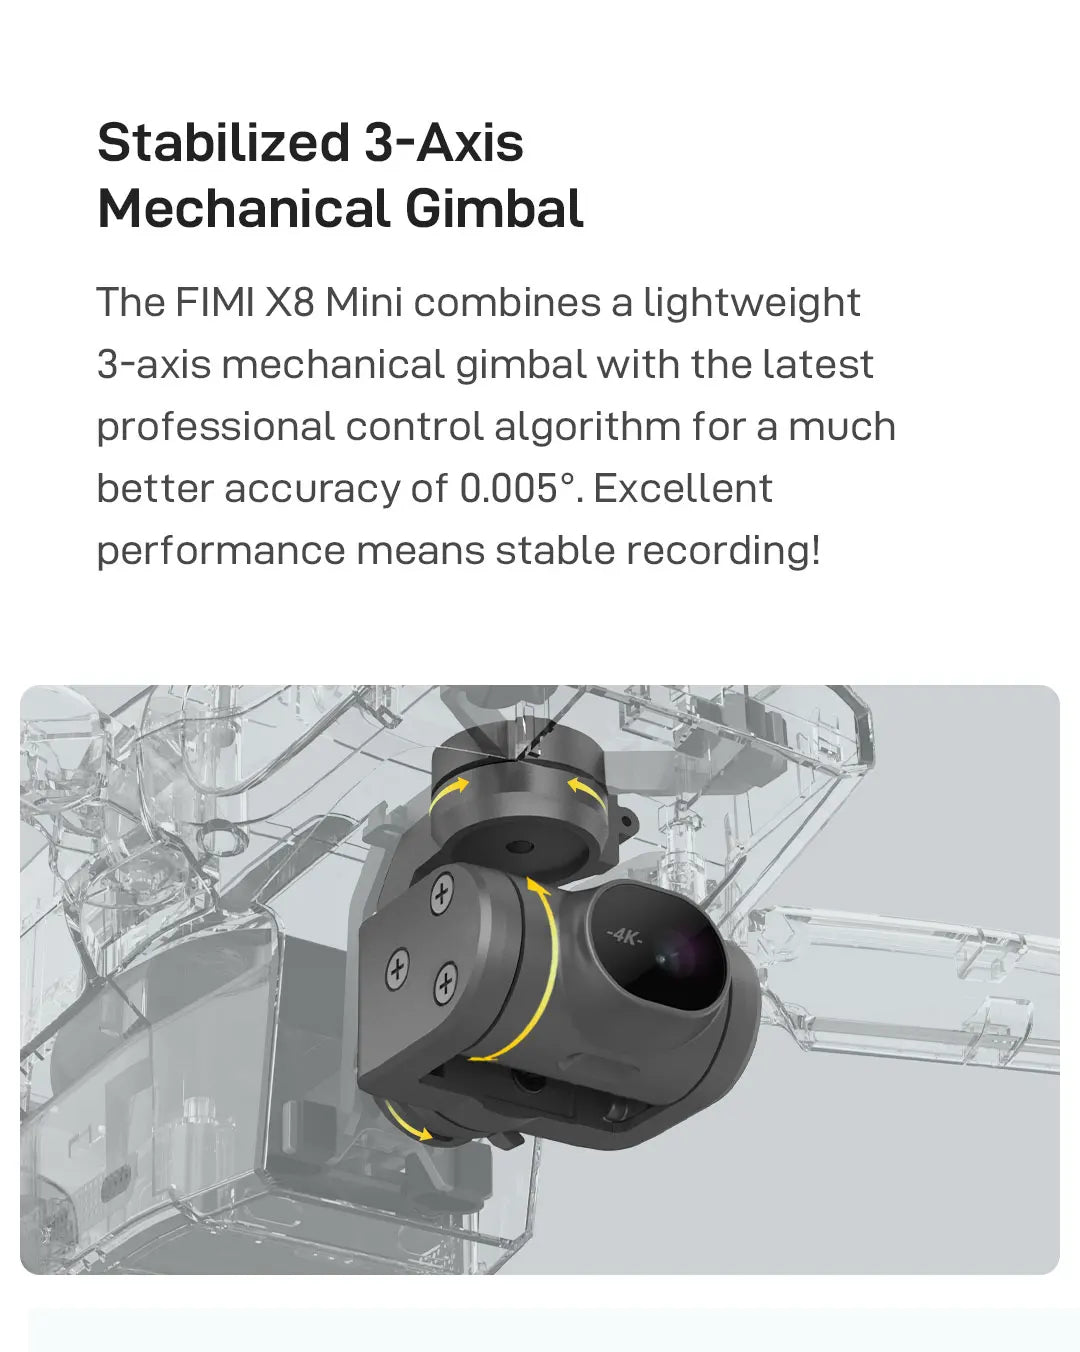 FIMI x8 Mini Drone, FIMI X8 Mini combines lightweight 3-axis mechanical gimbal with